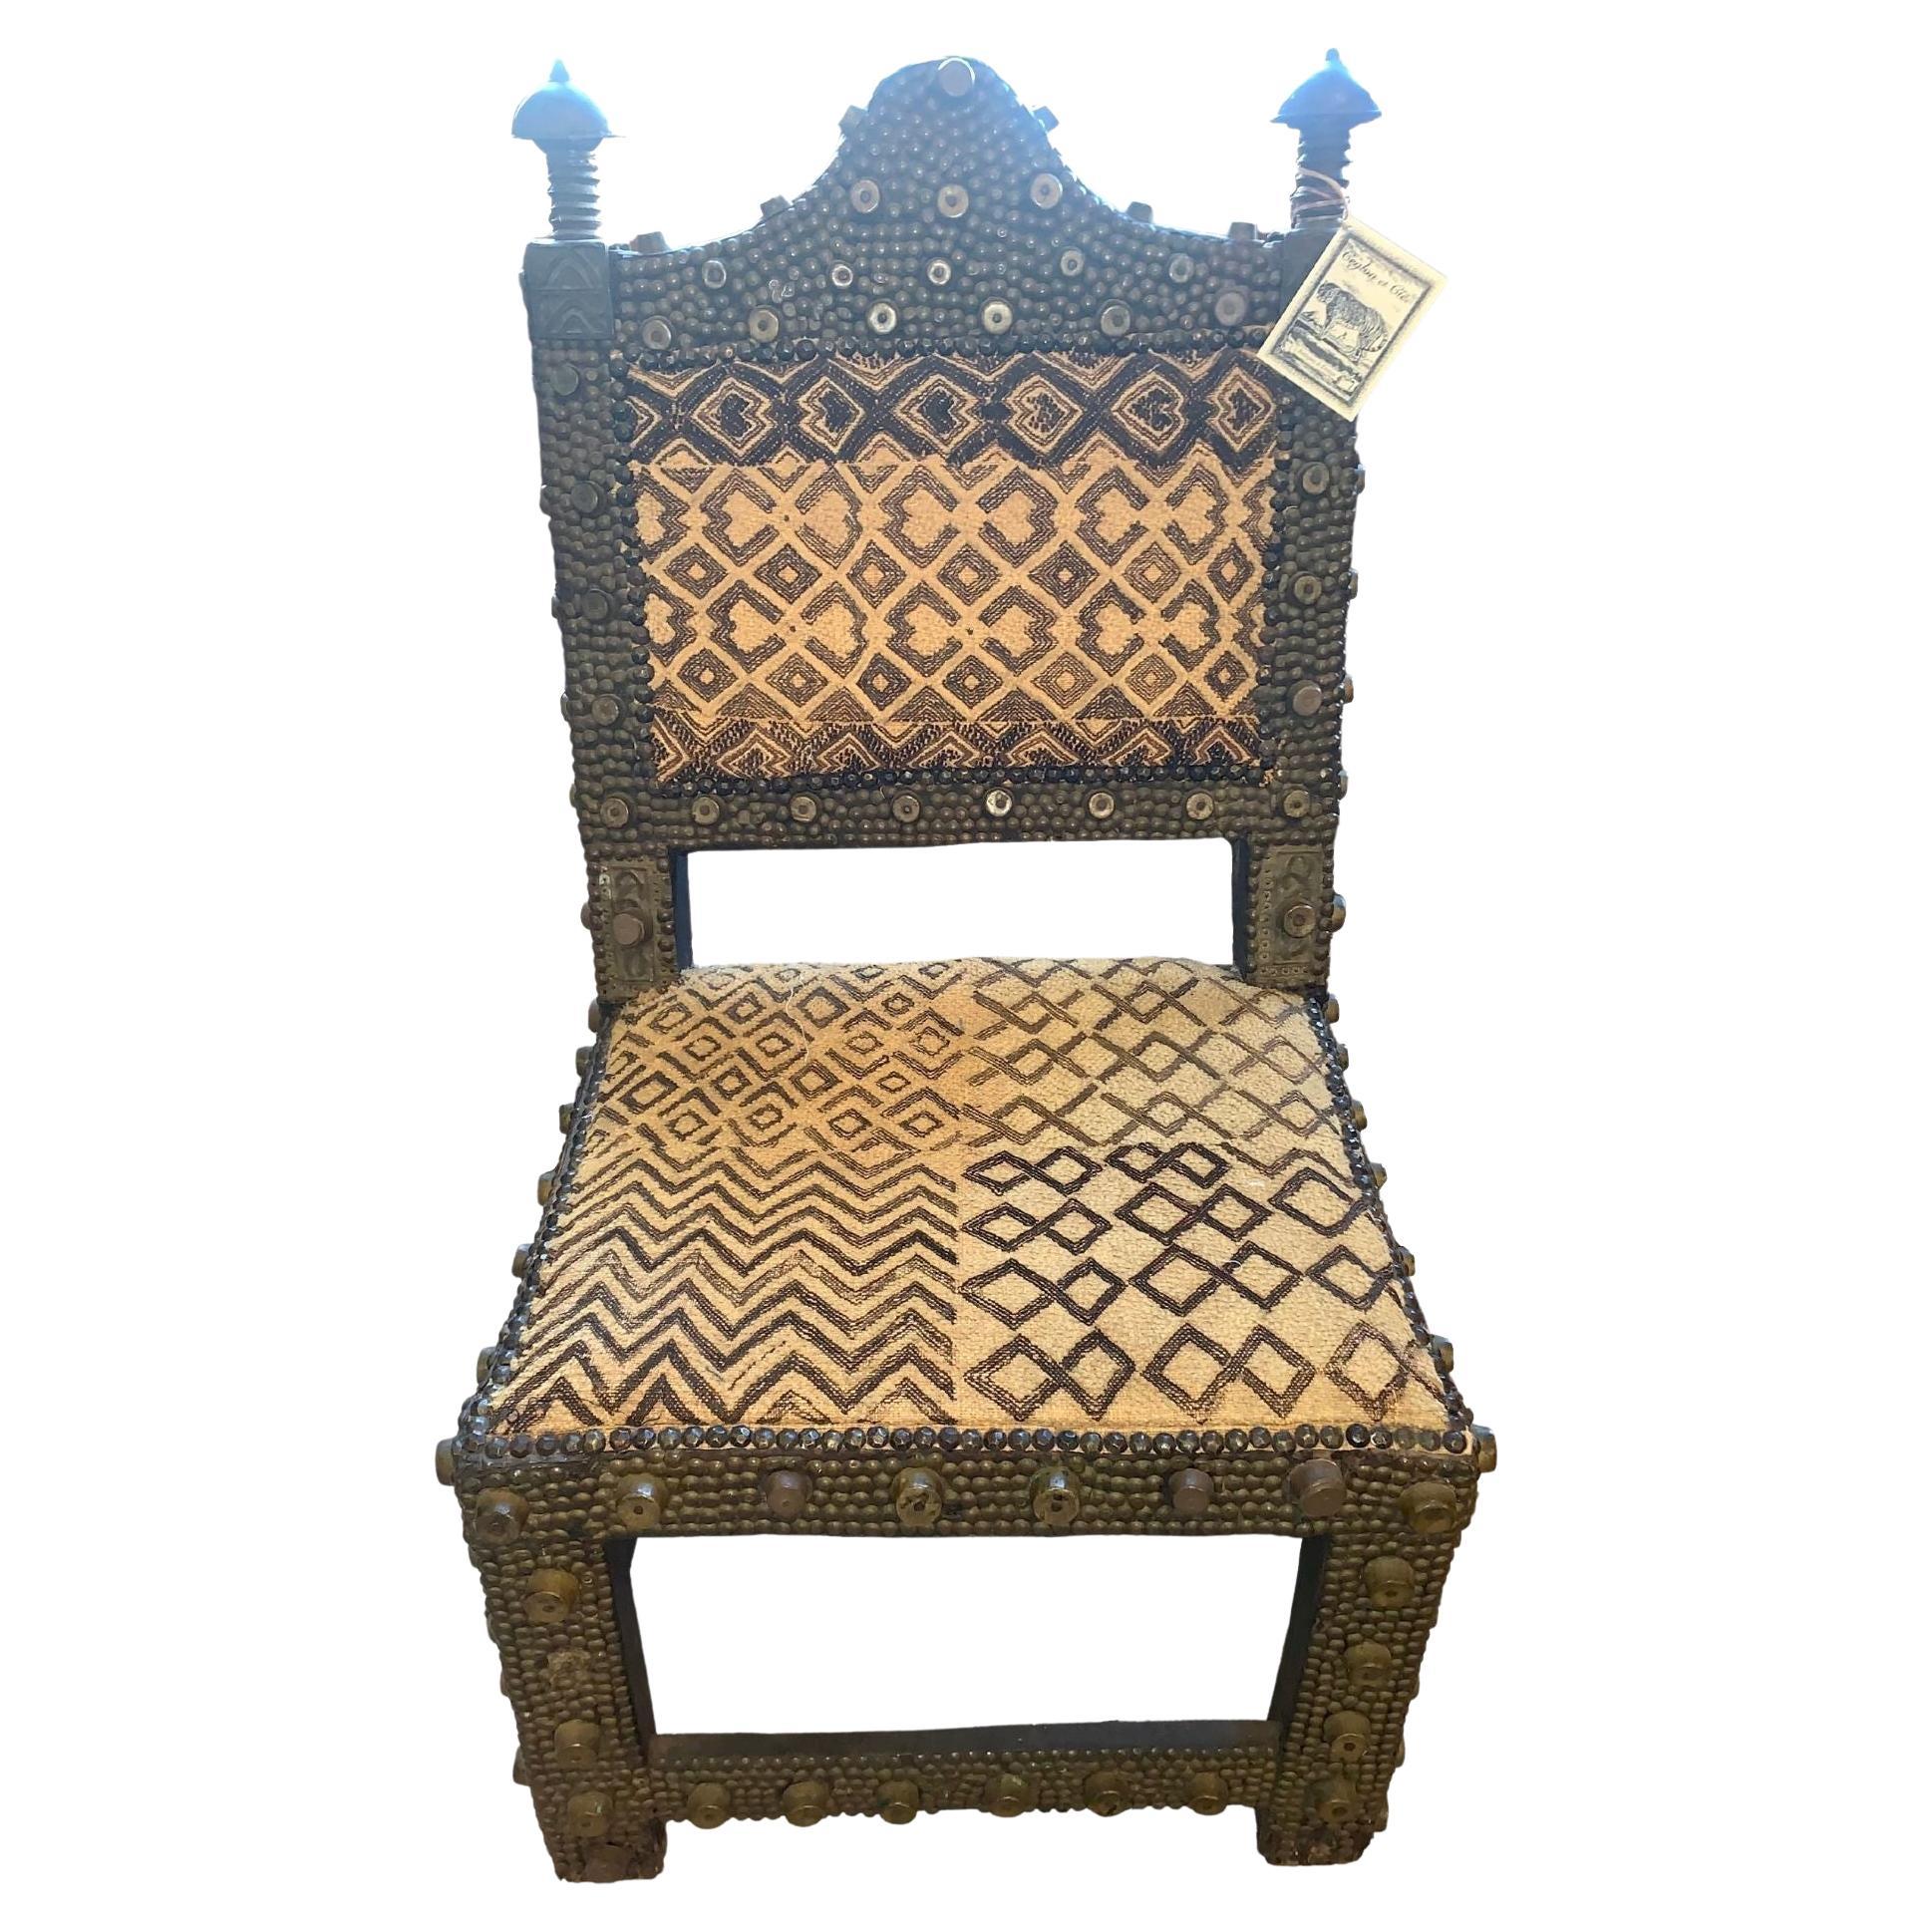 1860's Ashanti King's chair
Iron work with trade tracks and studs 
Bronze finials
Kuba cloth.